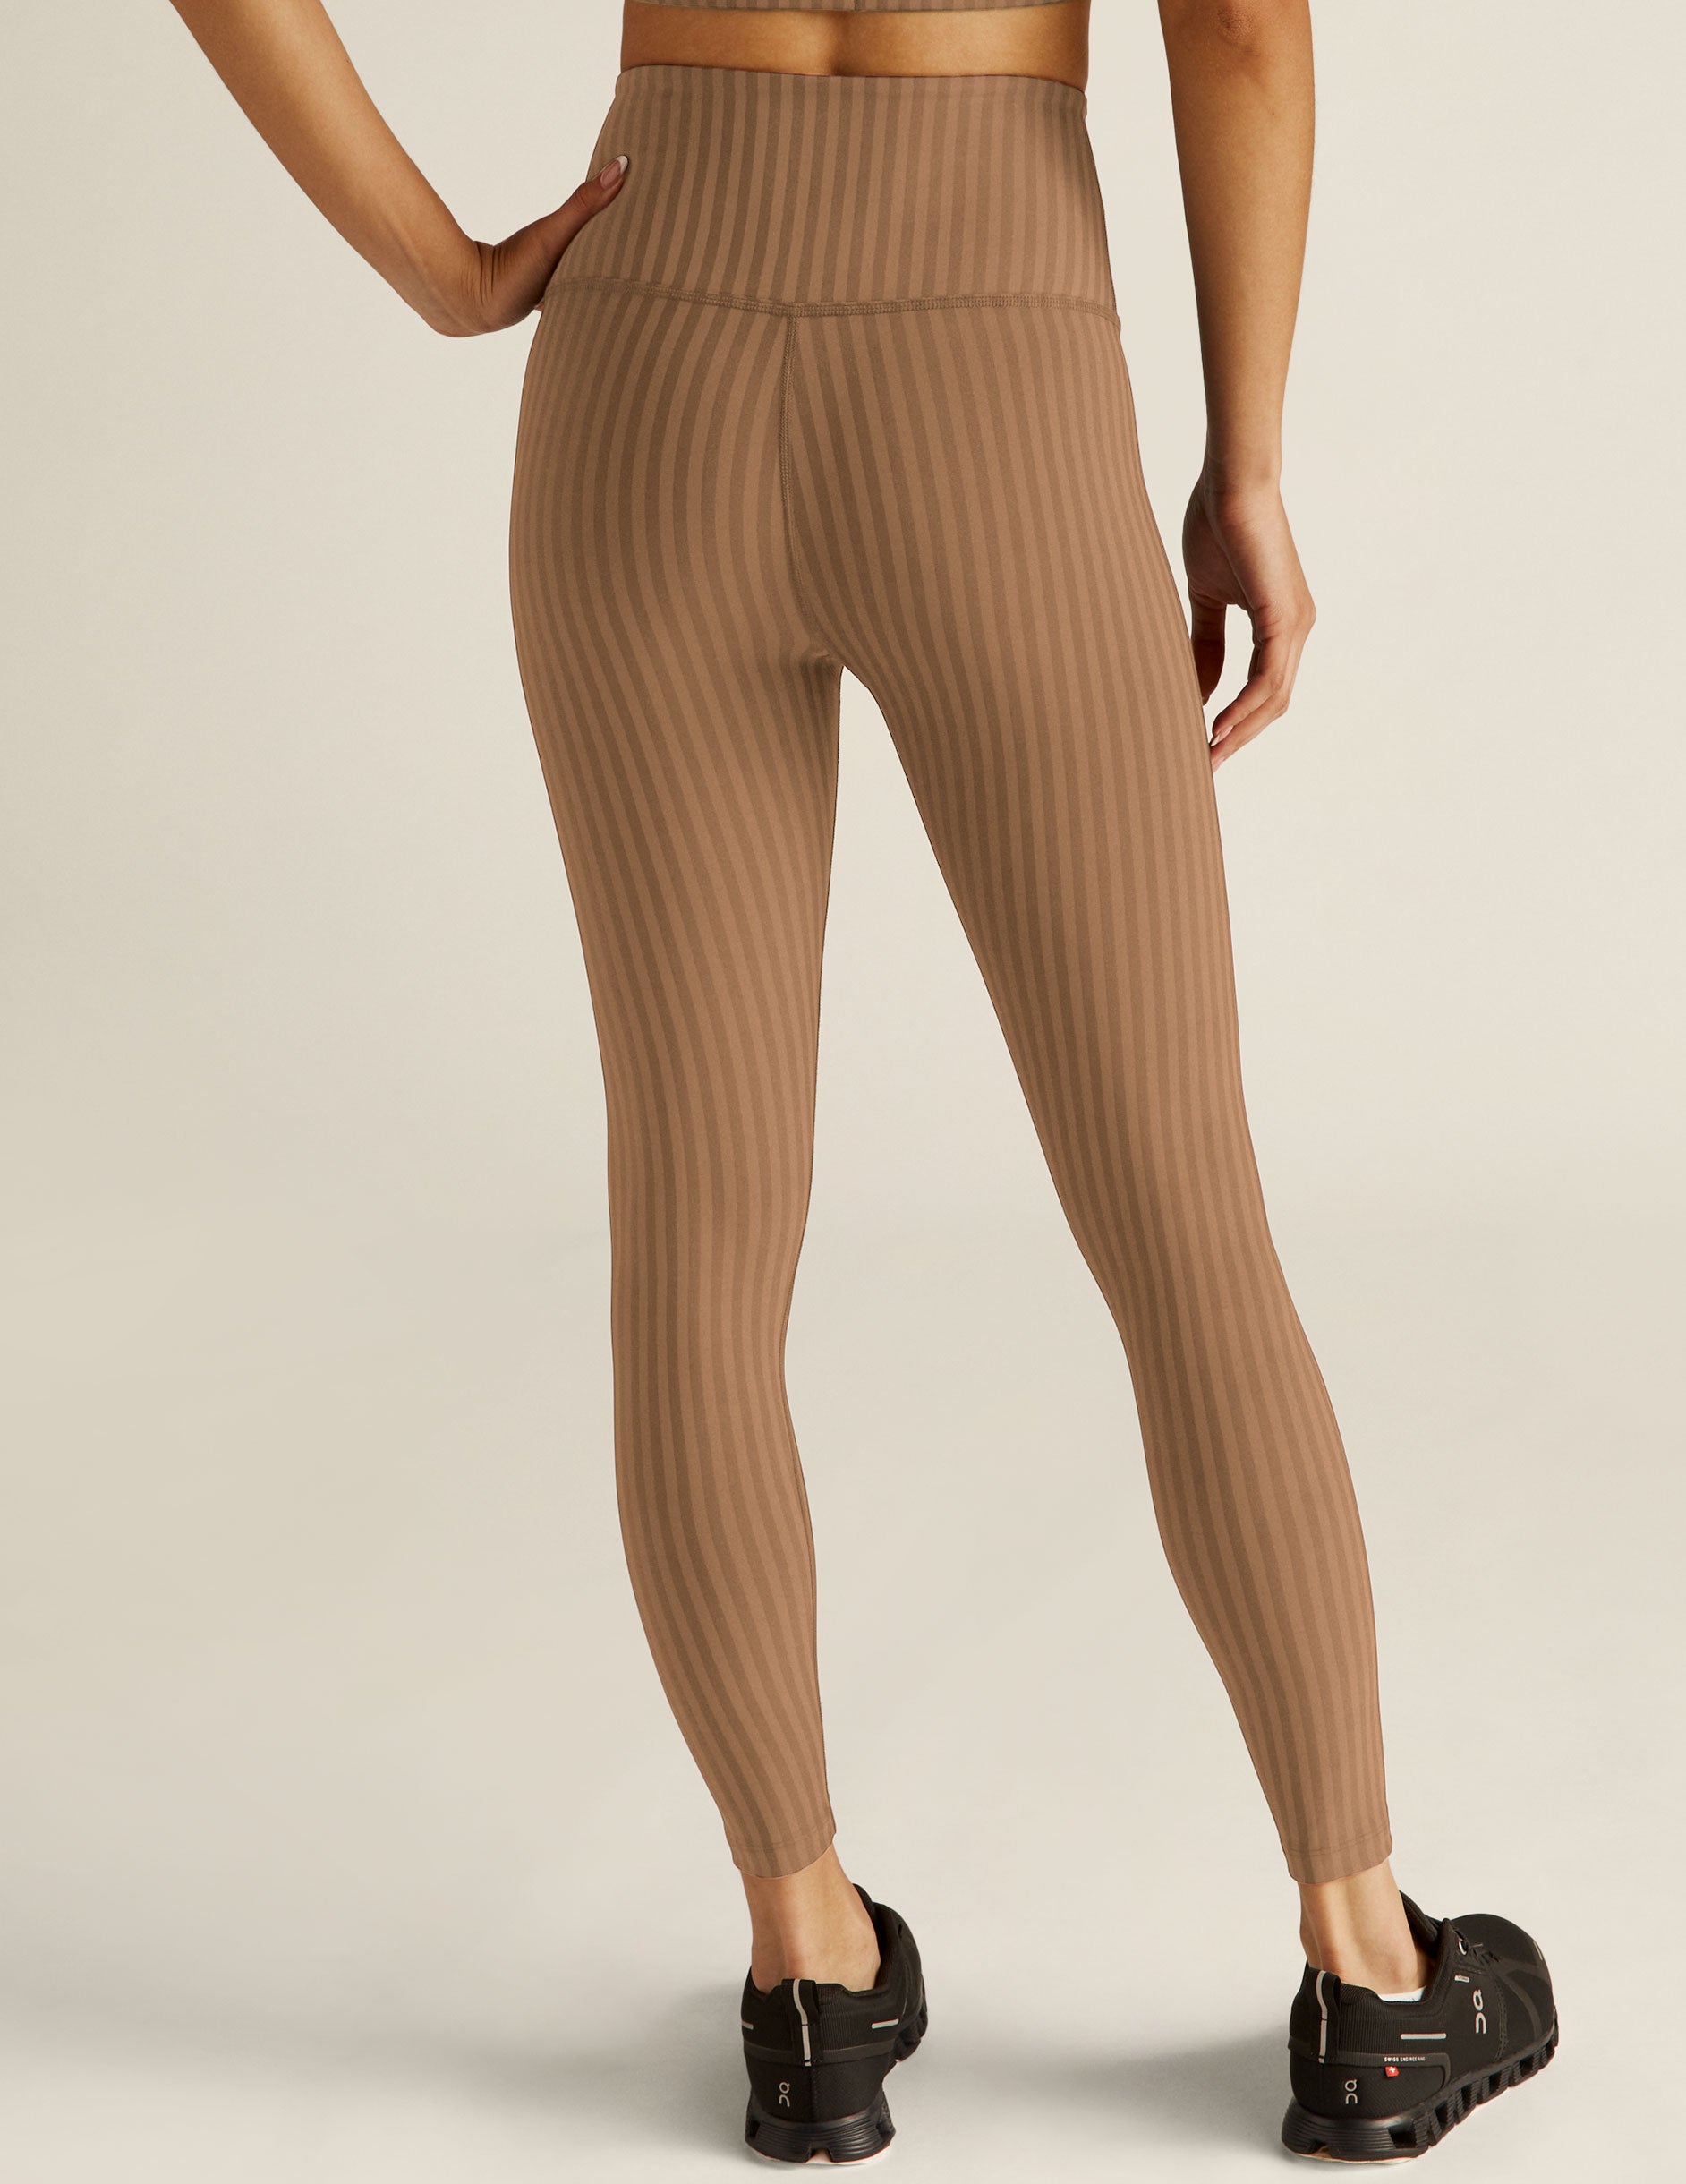 brown pin-striped printed high-waisted midi leggings.